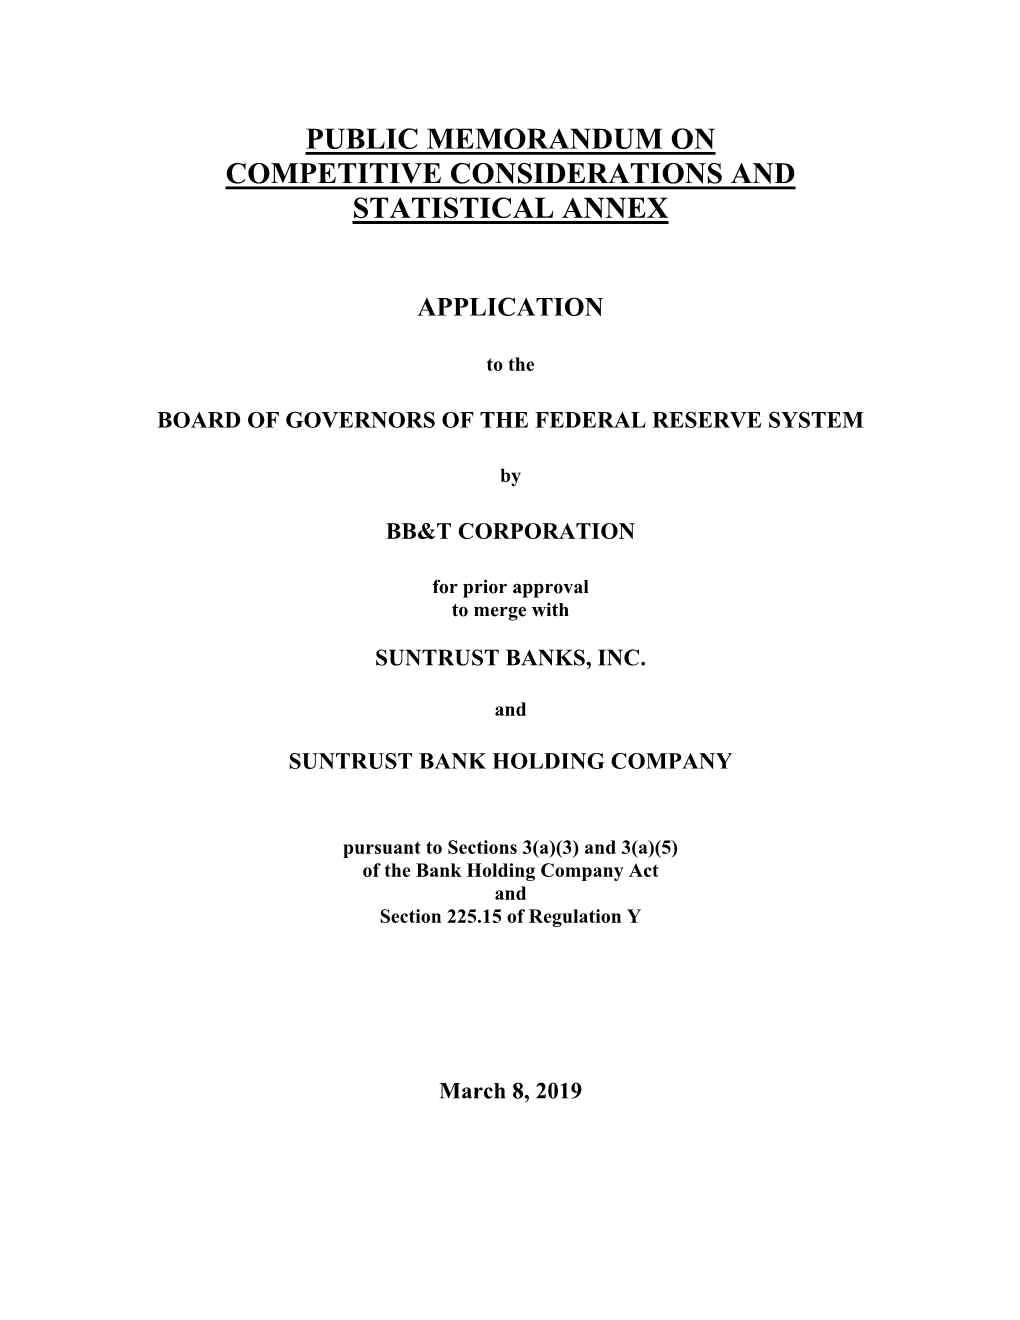 Public Memorandum on Competitive Considerations and Statistical Annex